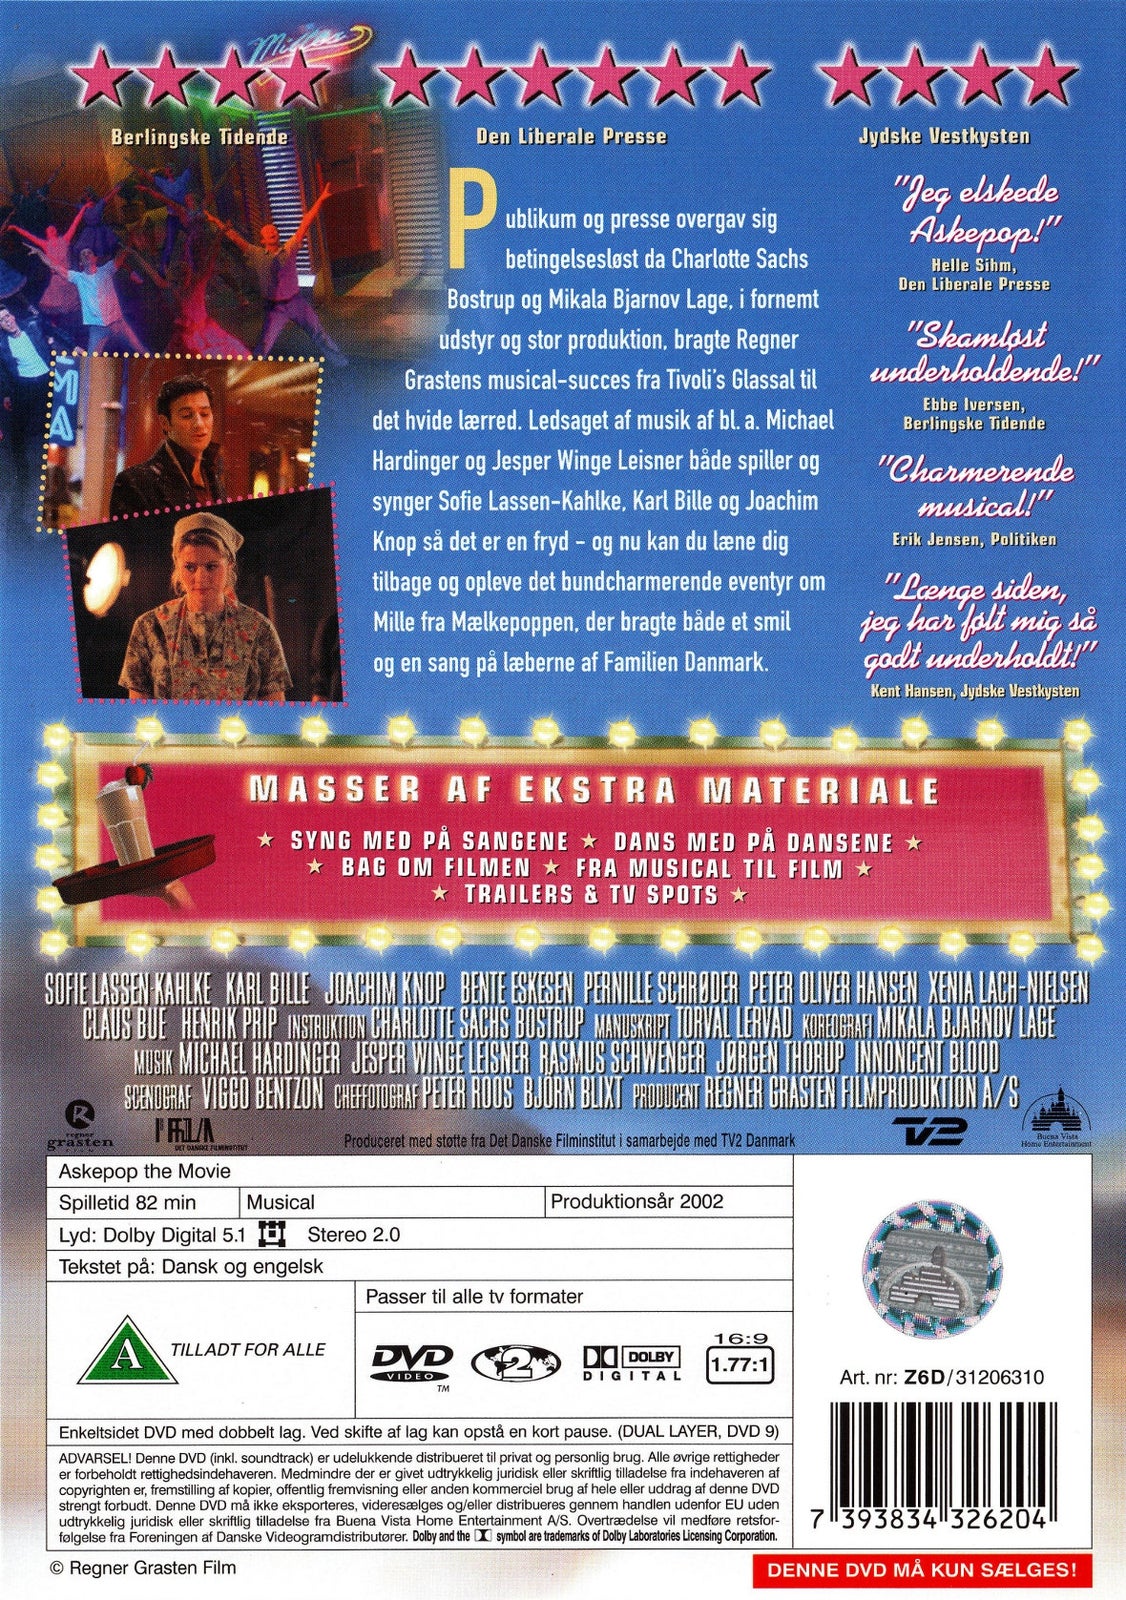 Askepop - The Movie (2002), instruktør Charlotte Sachs